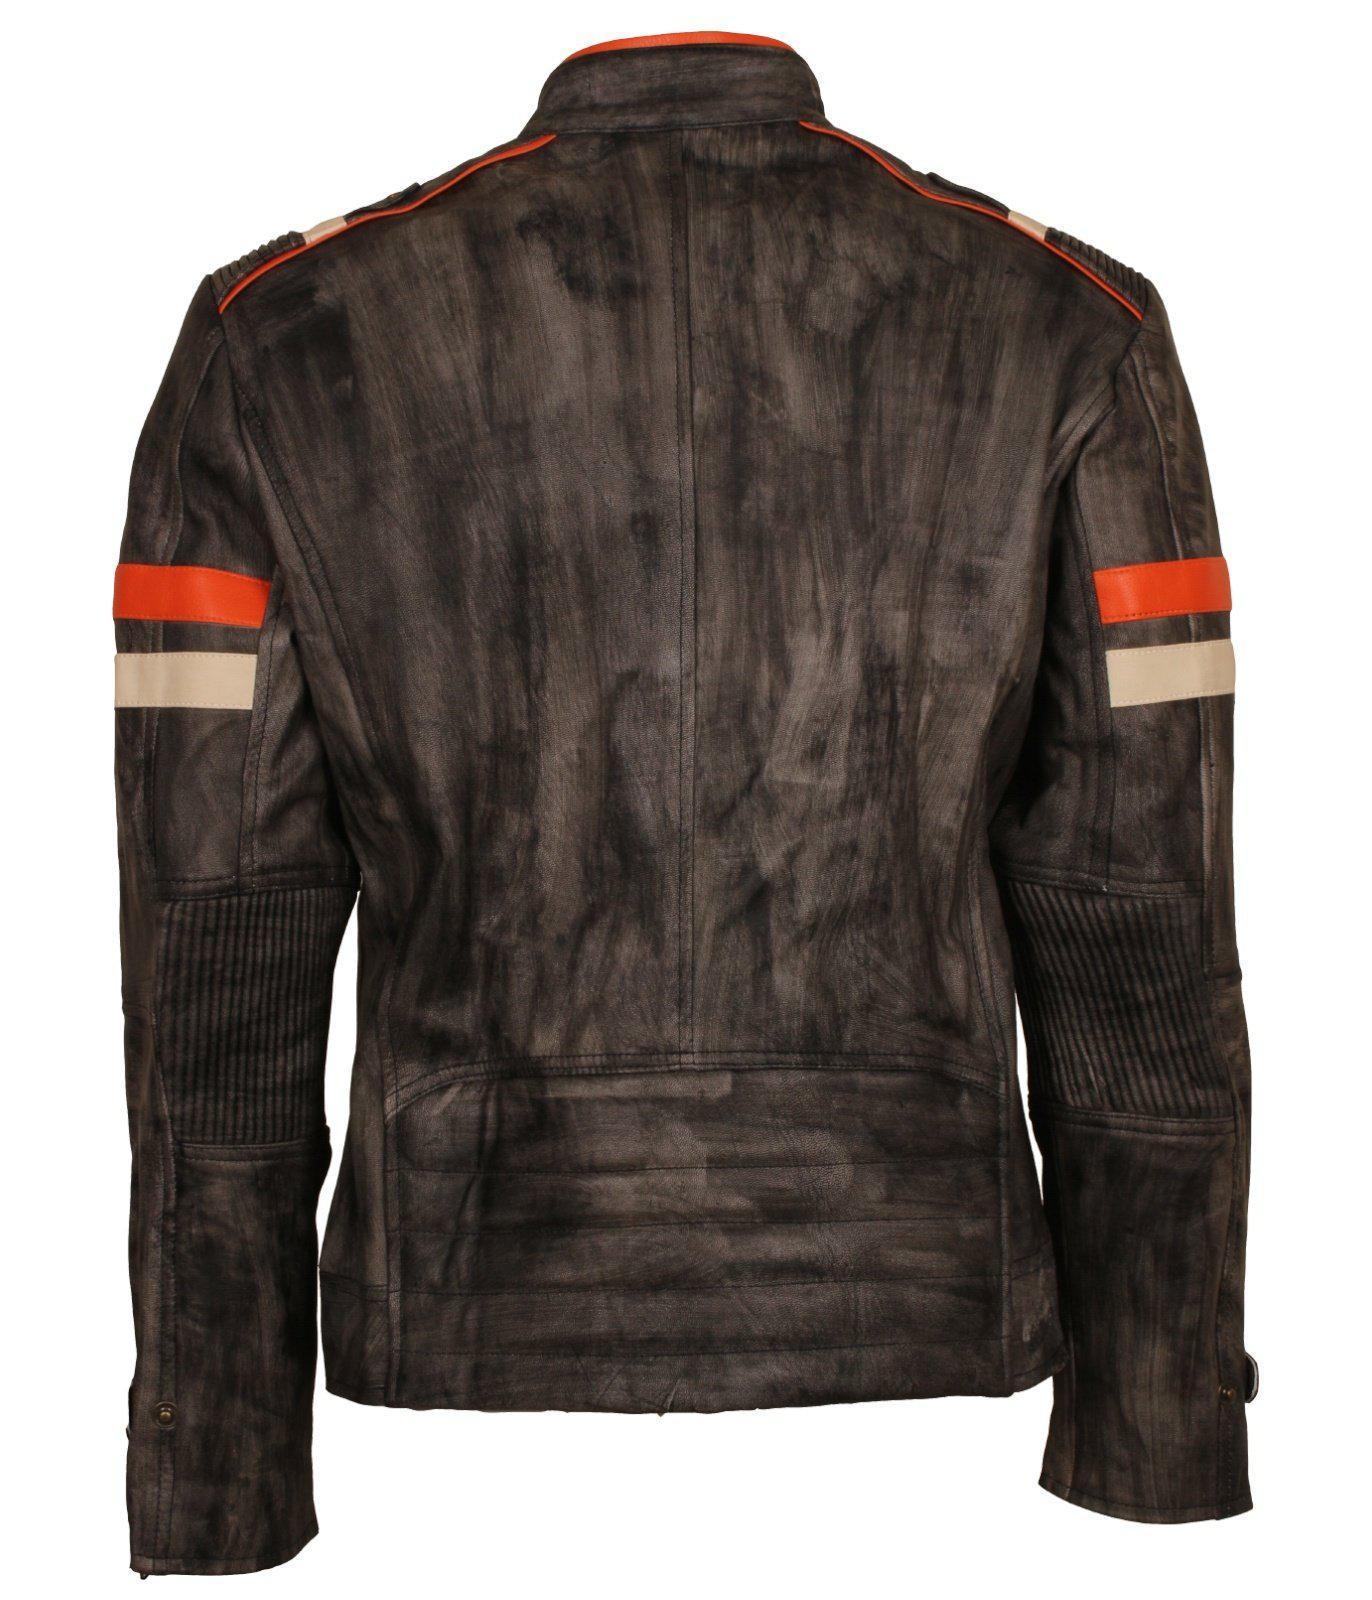 Waxed Brown Vintage Leather Biker Jacket - The Vintage Leather